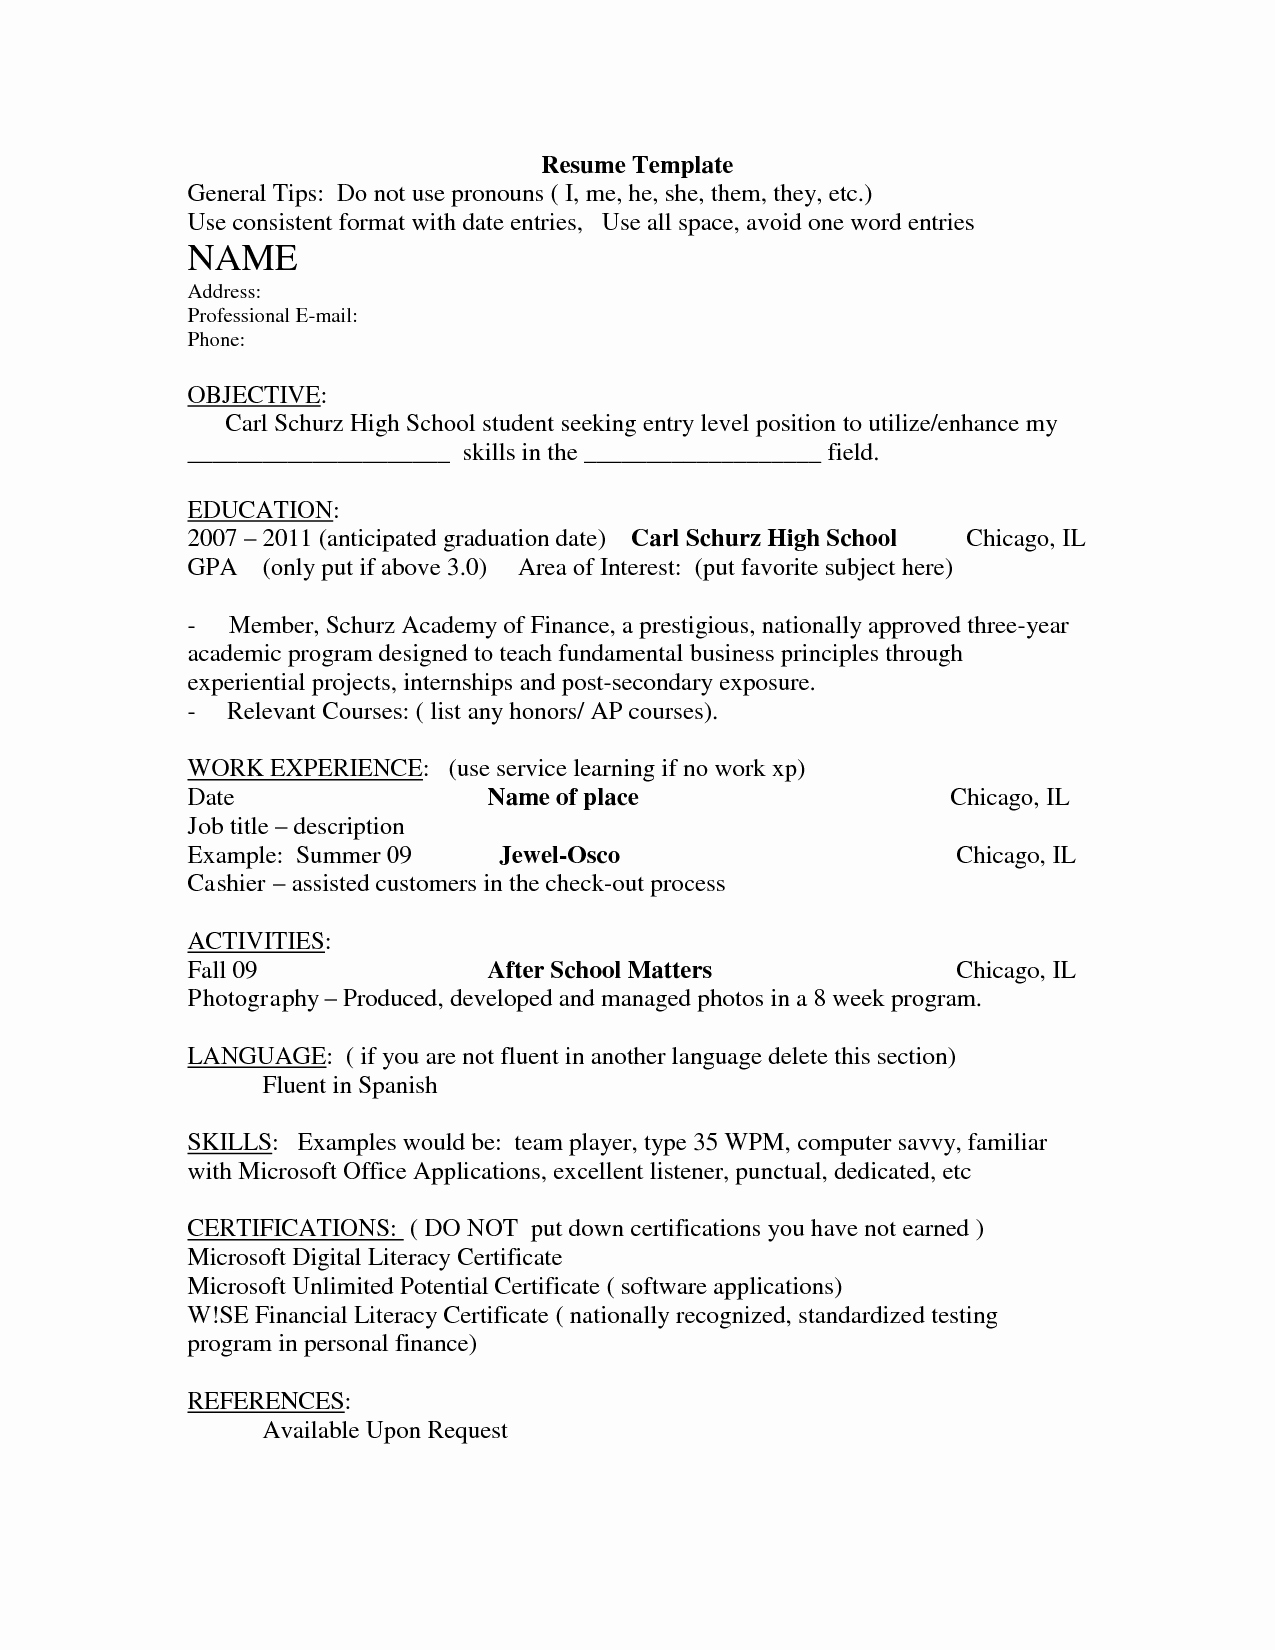 Resume for Non High School Graduate Resume Ideas